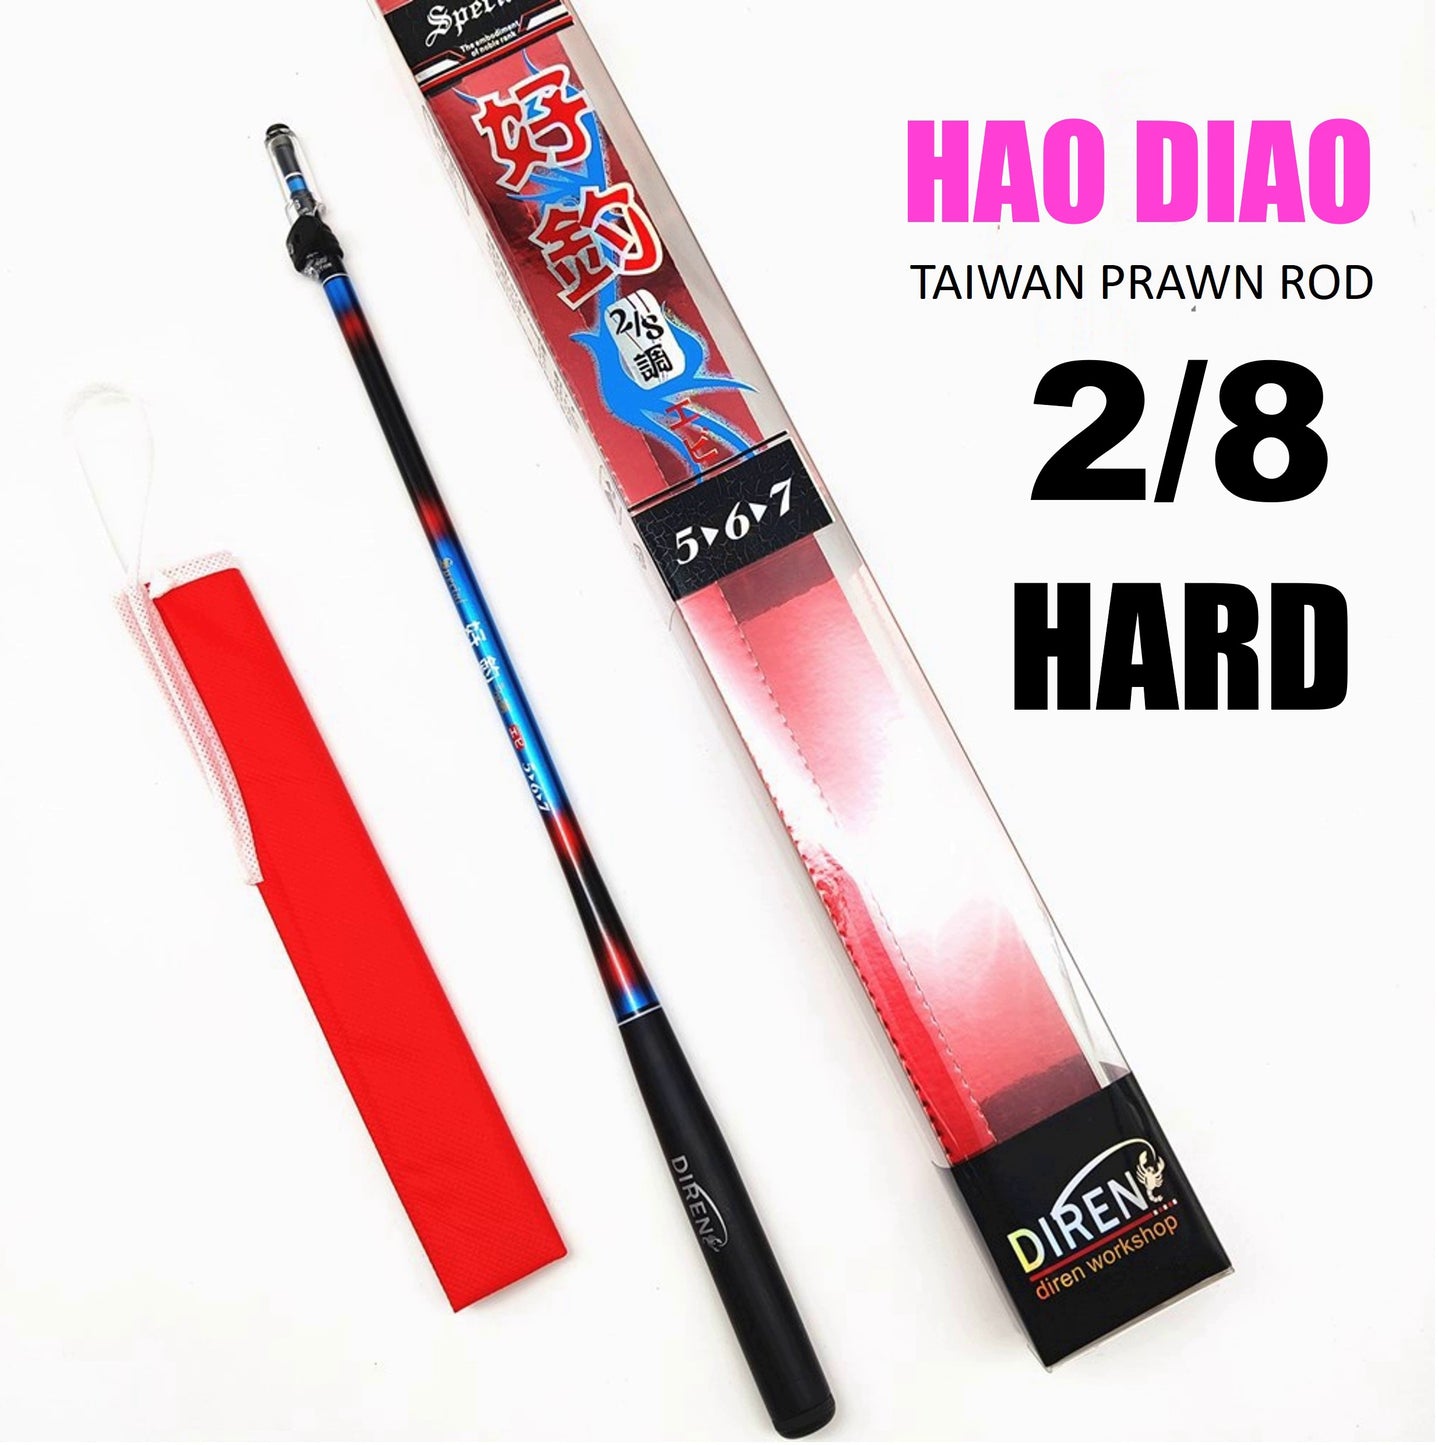 Hao Diao Prawn rod PR036